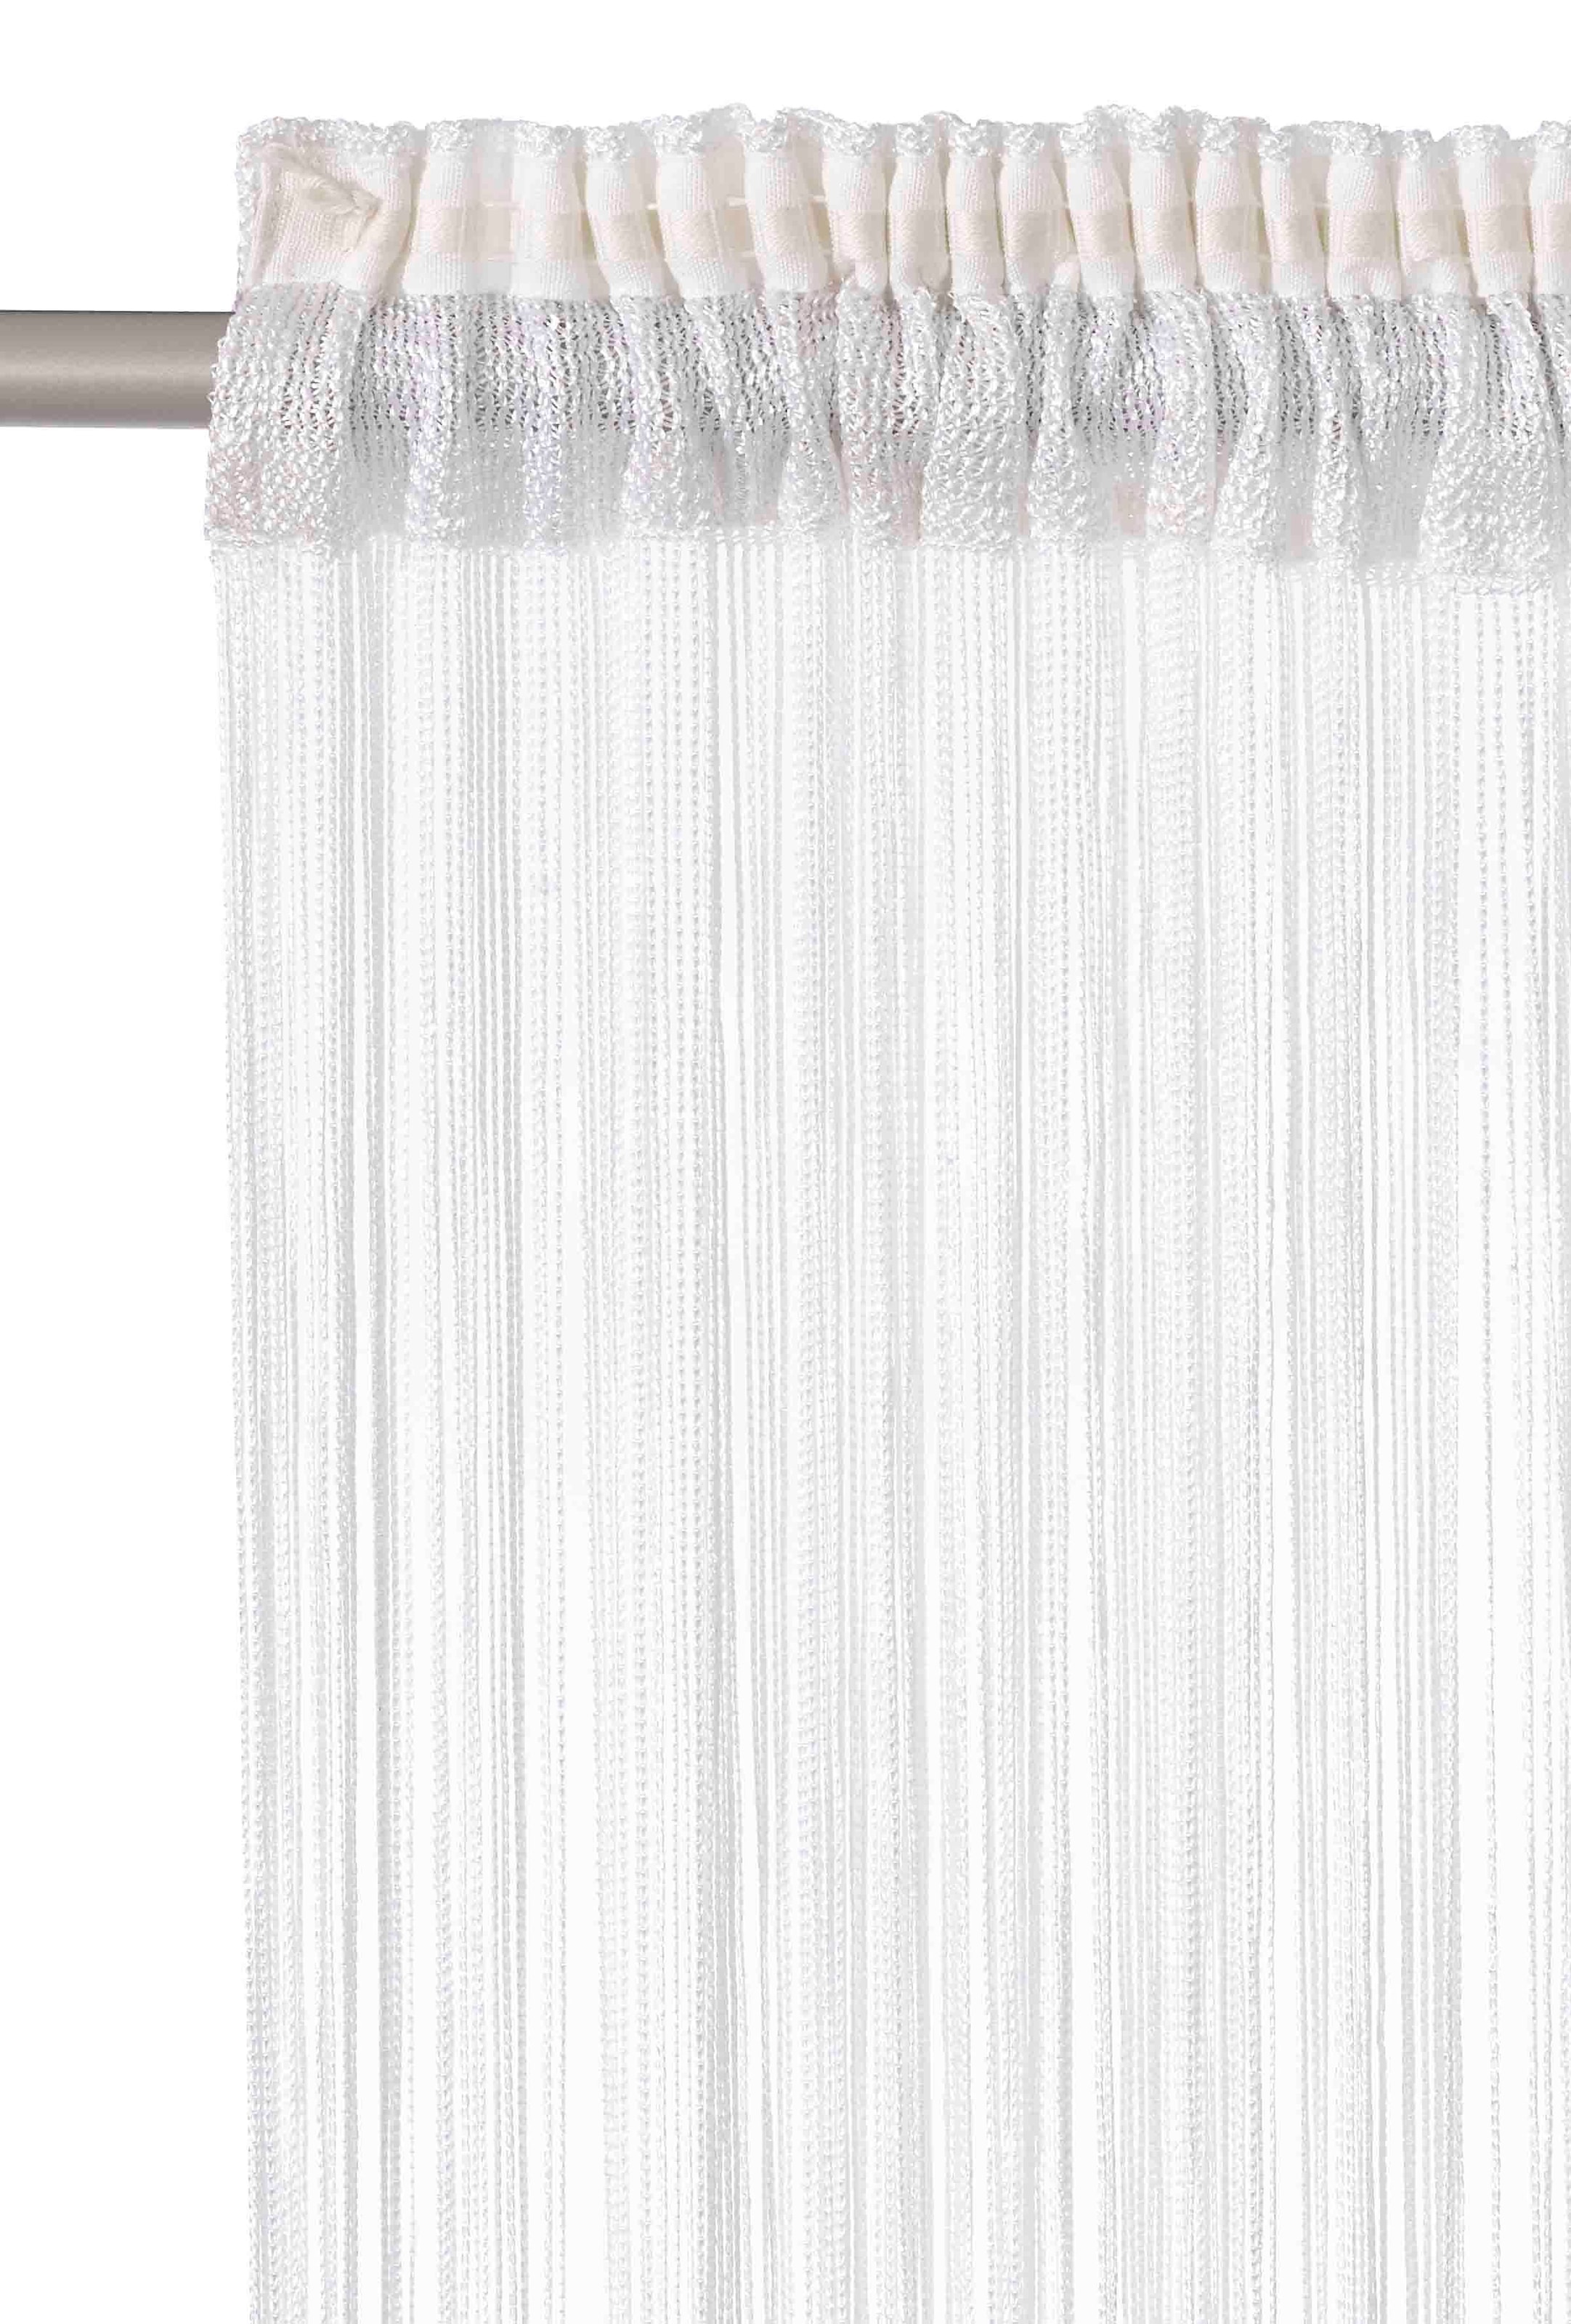 my home Polyester, transparent, Kräuselband, »Fao-Uni«, bei pflegeleicht OTTO bestellen multifunktional, (1 Fadenvorhang St.)